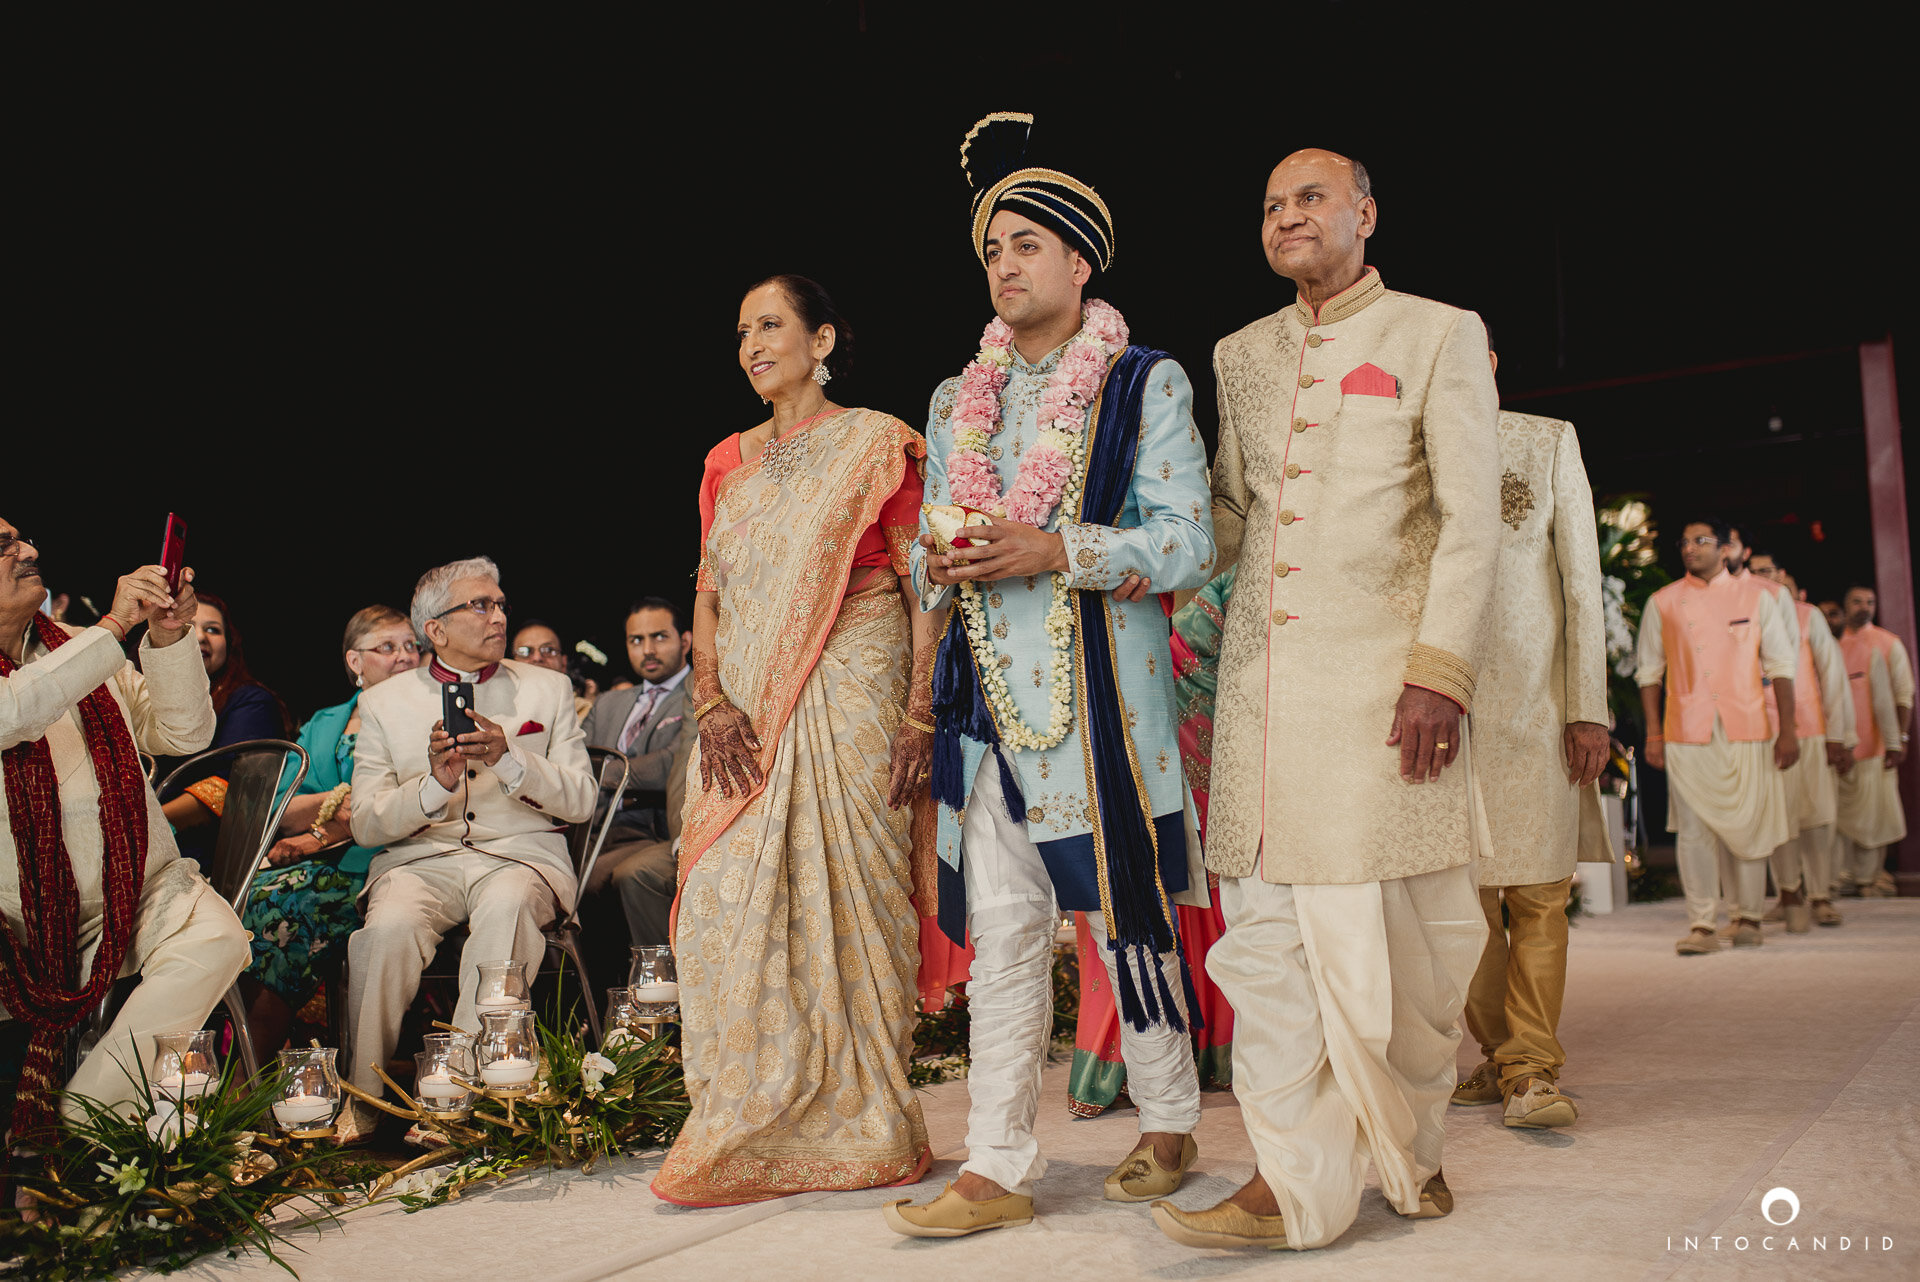 Chicago_Indian_Wedding_Photographer_Intocandid_Photography_Ketan & Manasvi_28.JPG